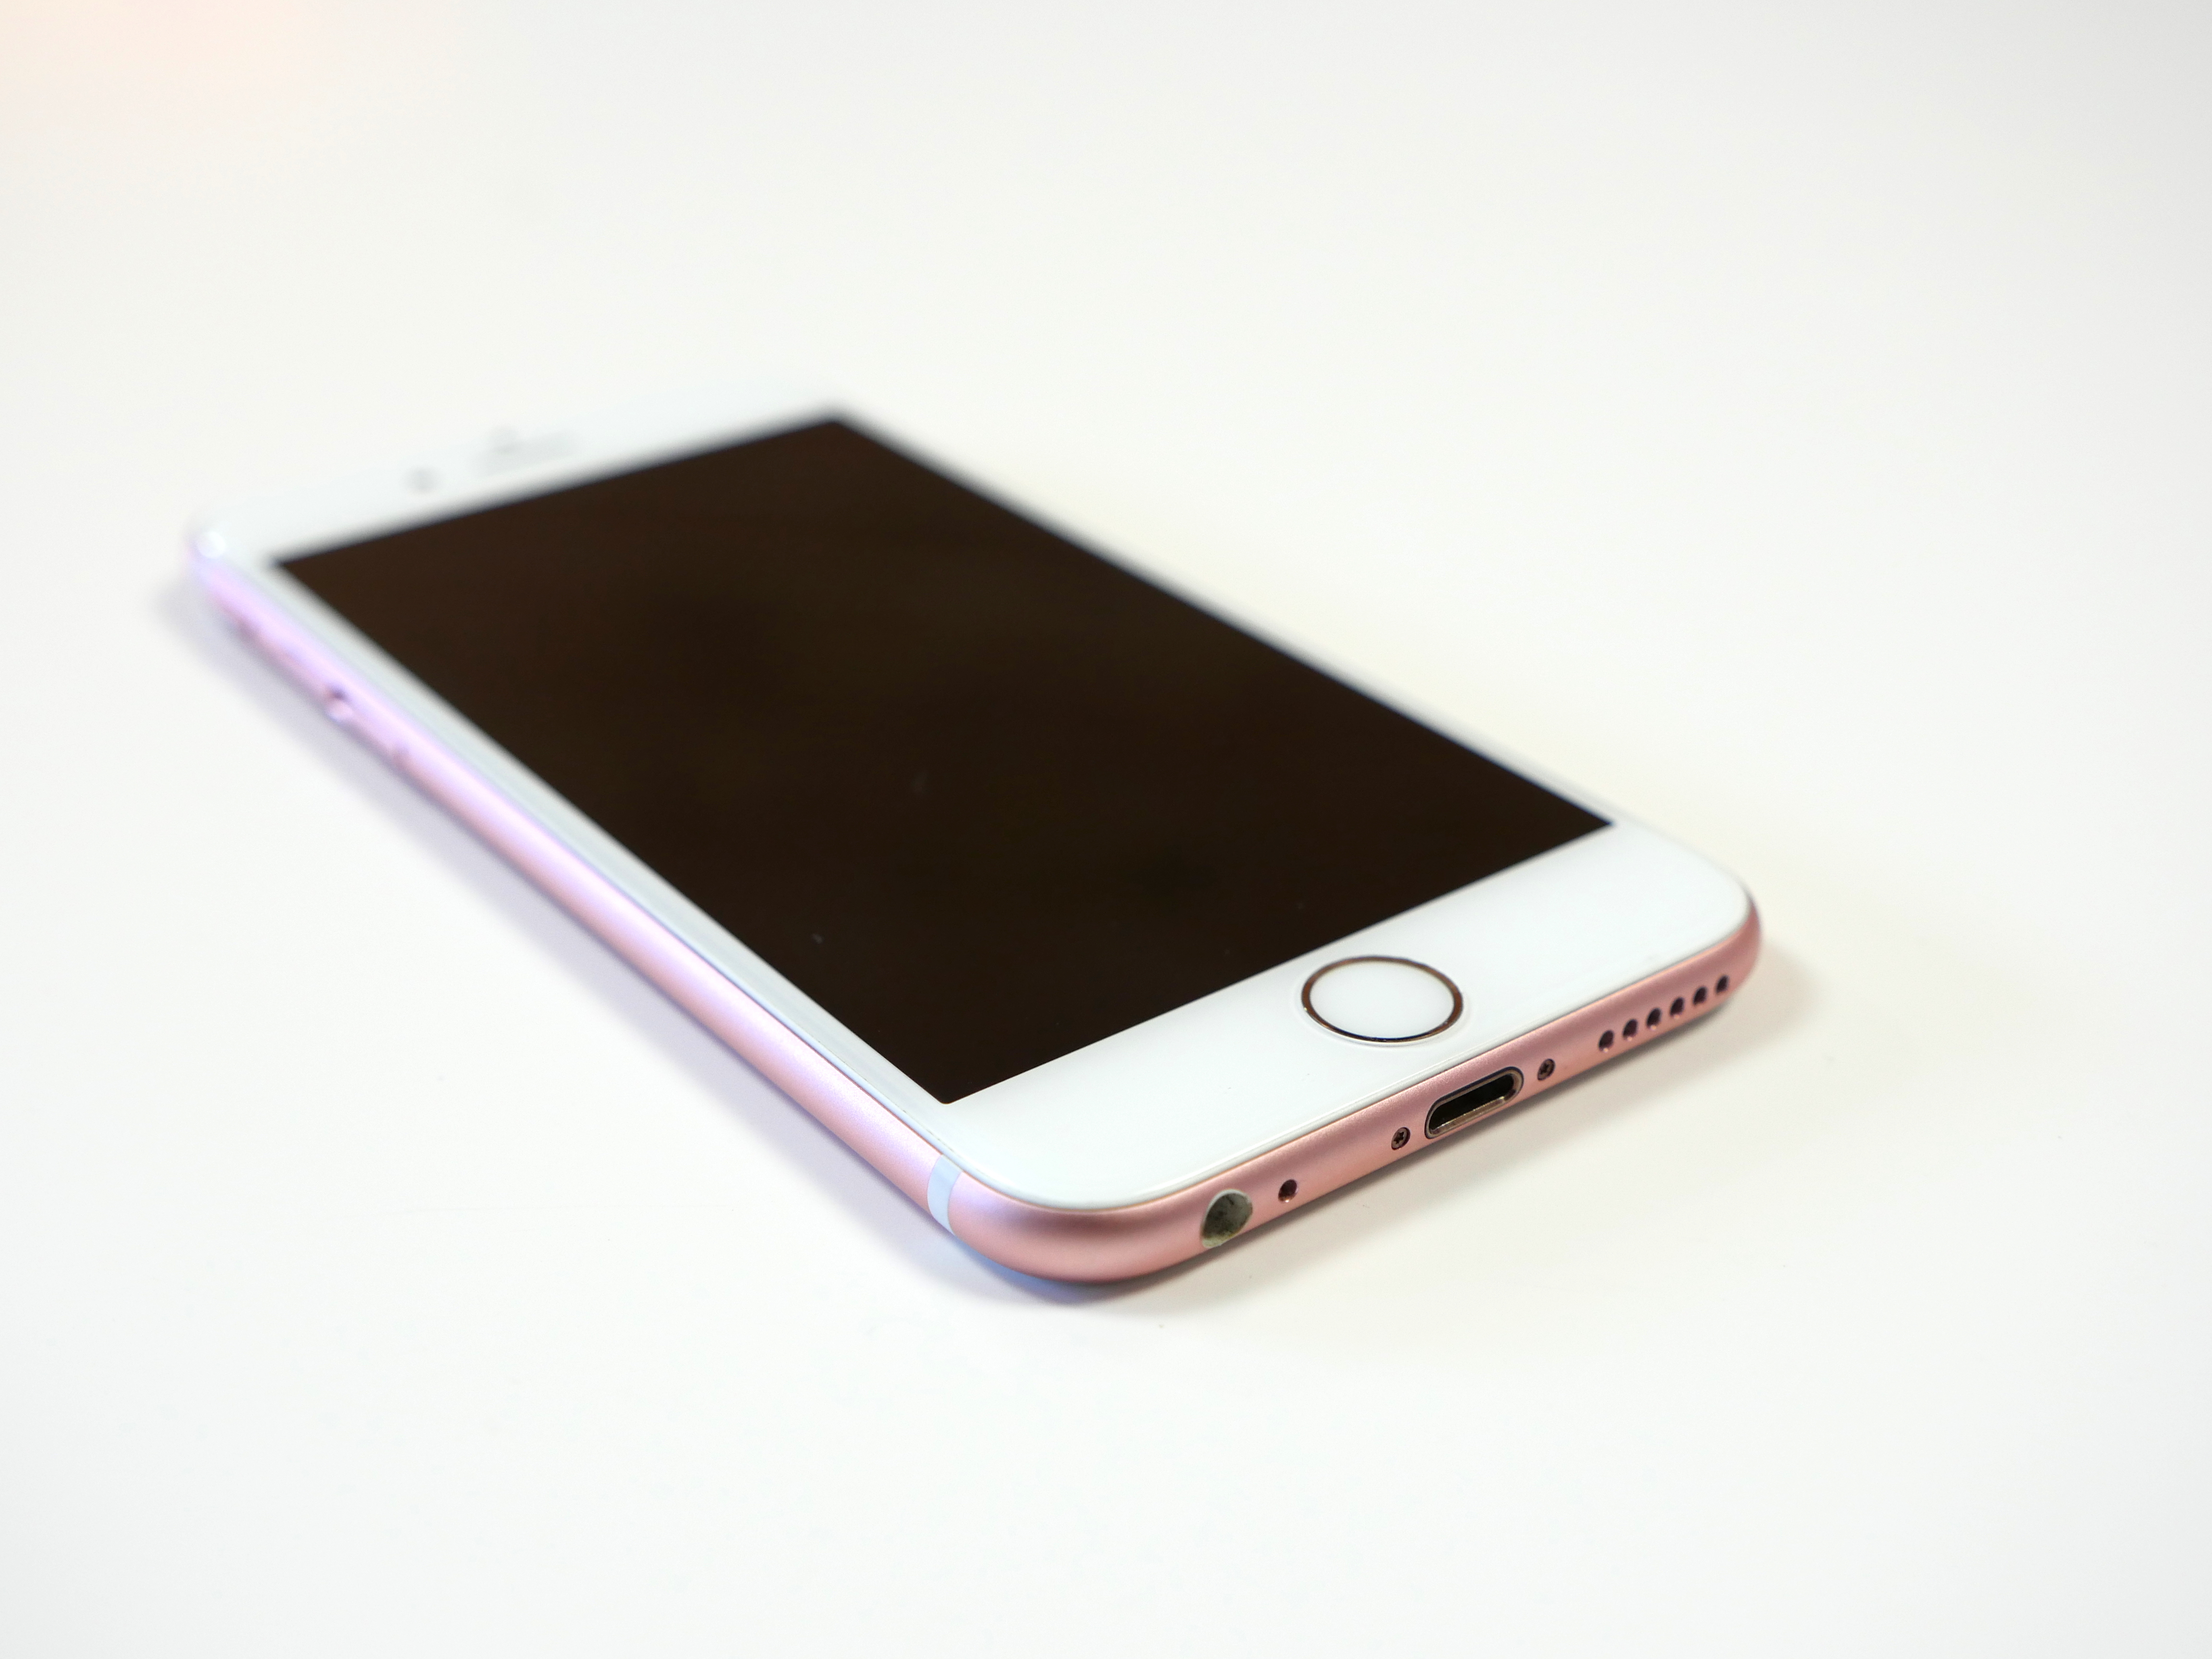 iphone 6s in roségold